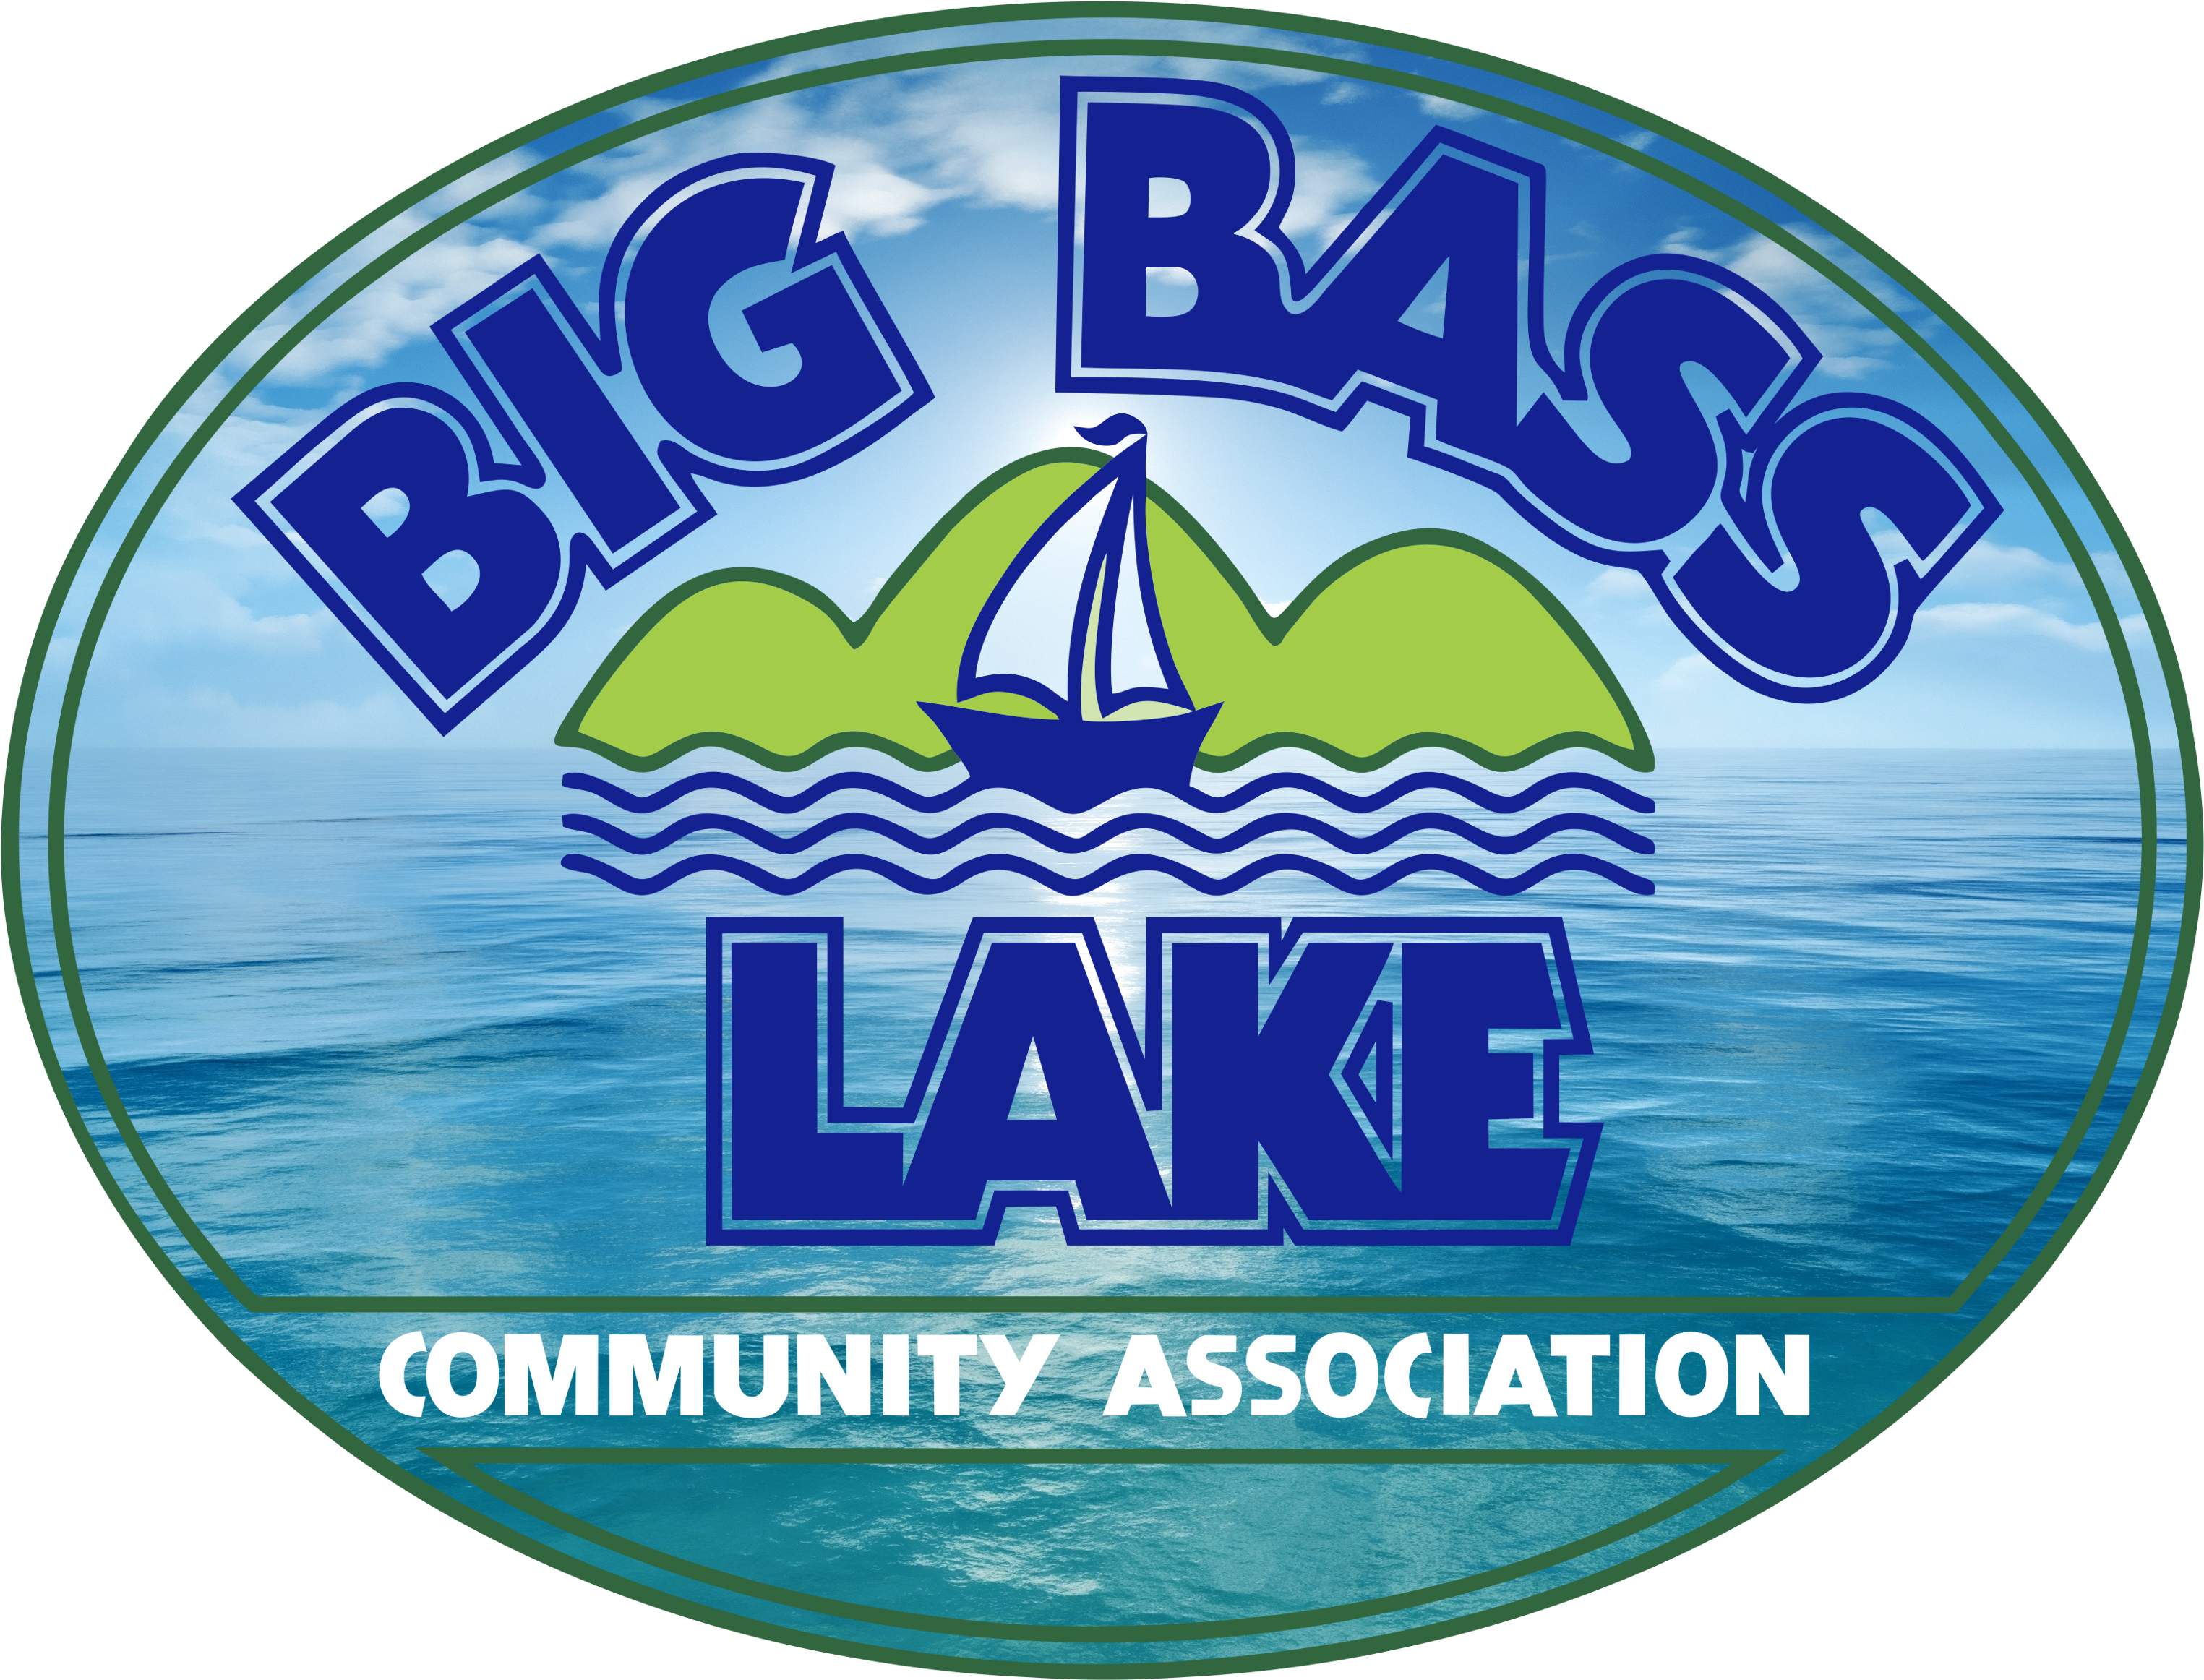 Big Bass Lake Community Association Logo PNG